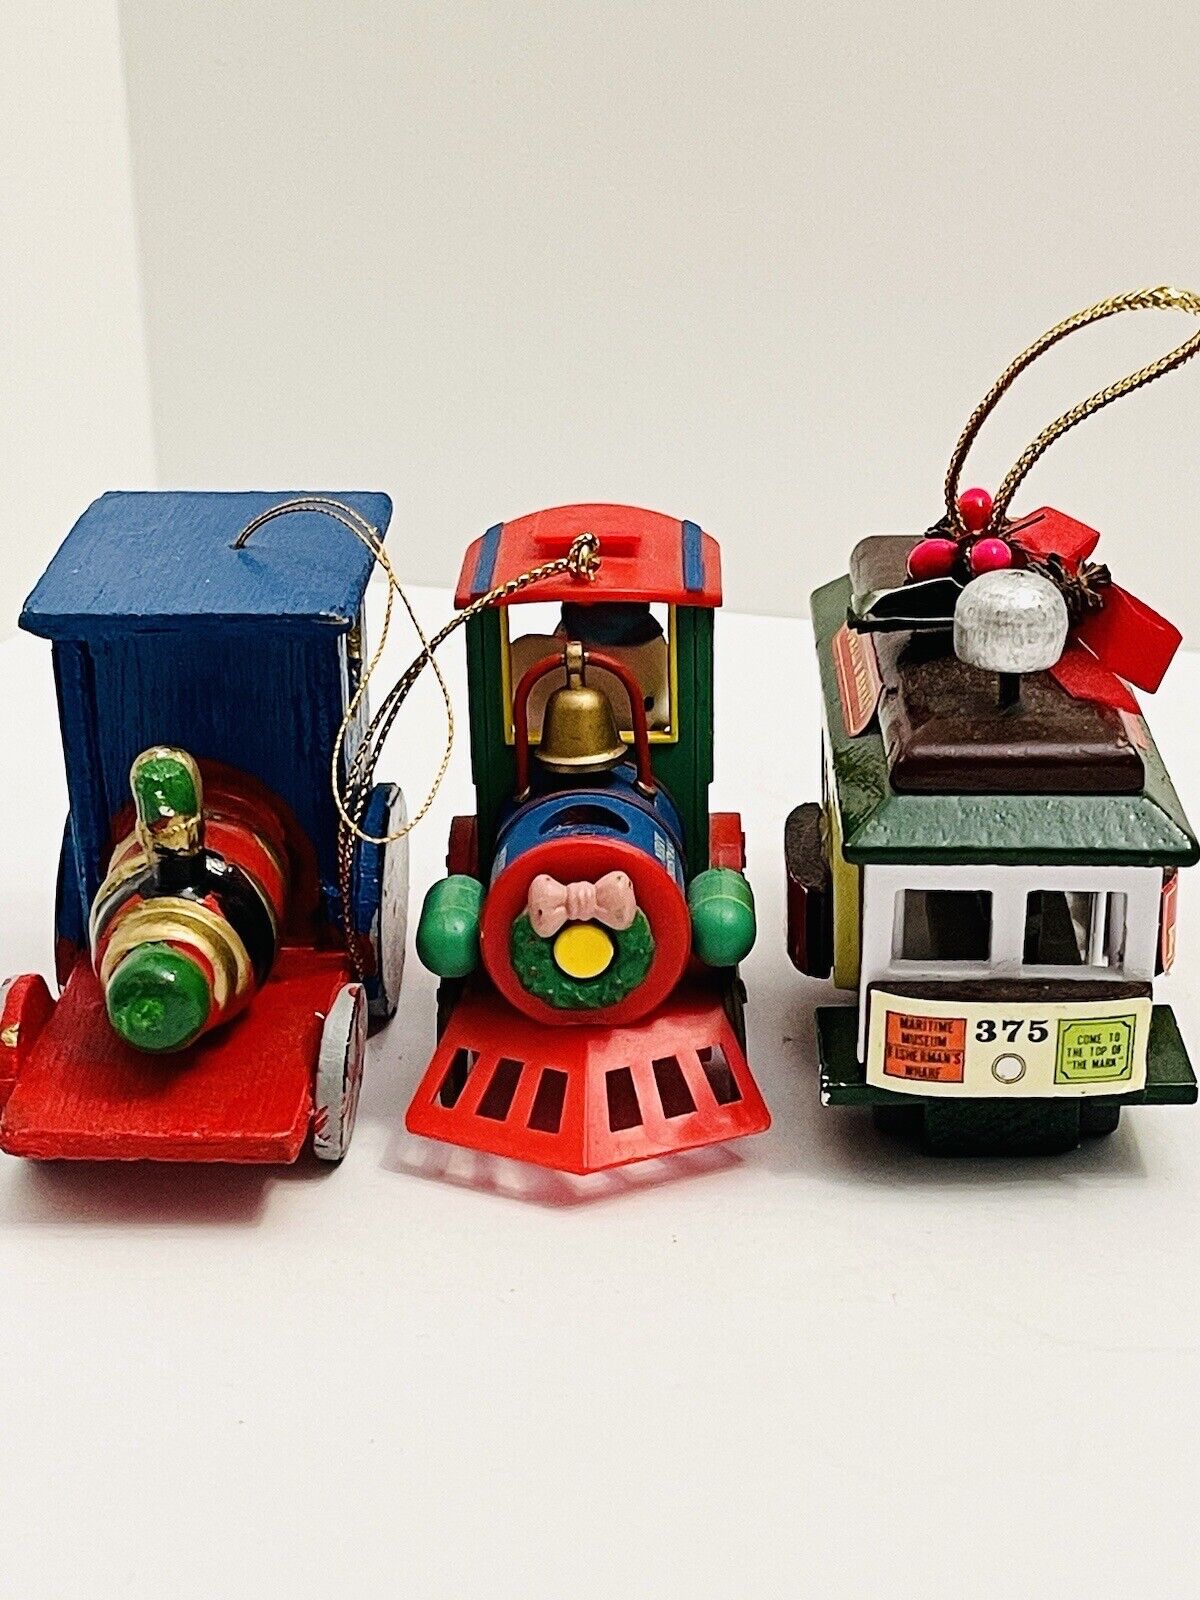 3 Lot VTG  Christmas Ornaments Mouse Train Hallmark KCI Seasonal Collectibles